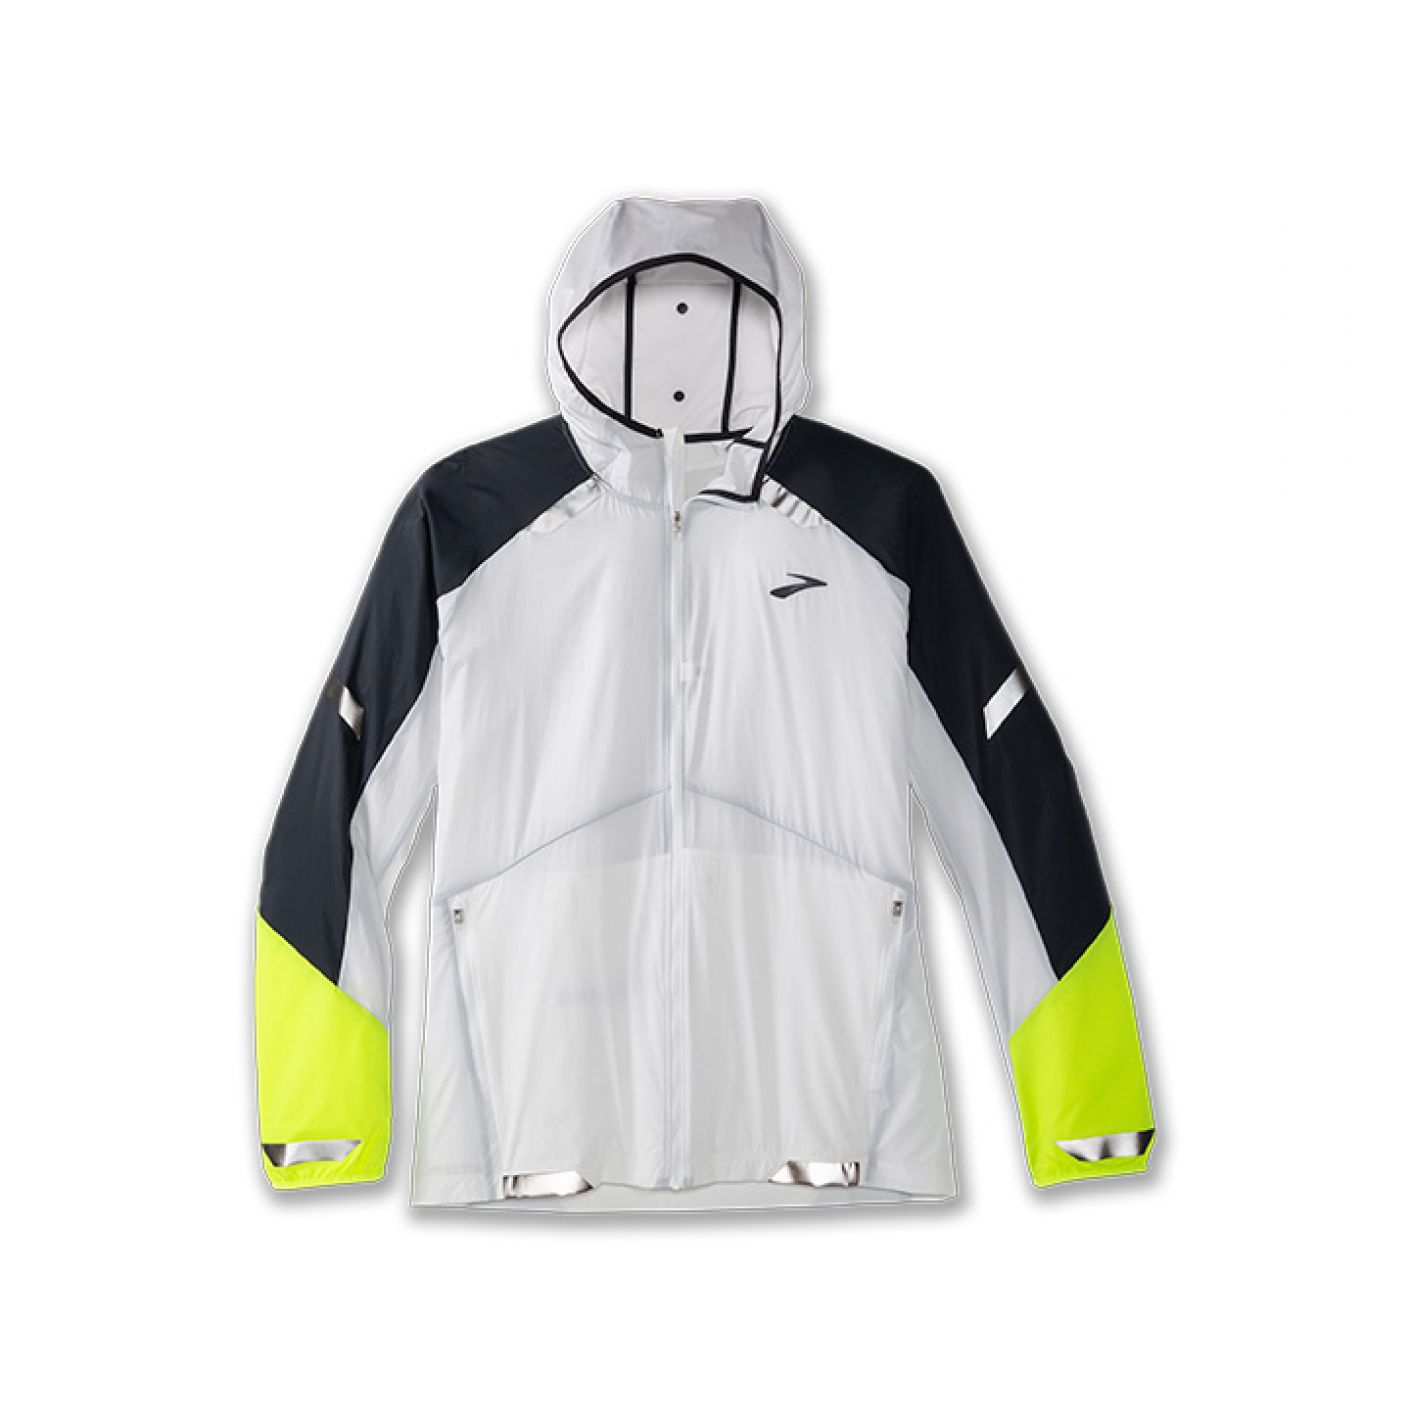 Brooks Run Visible Convertible Jacket White/Asphalt/Nightlife